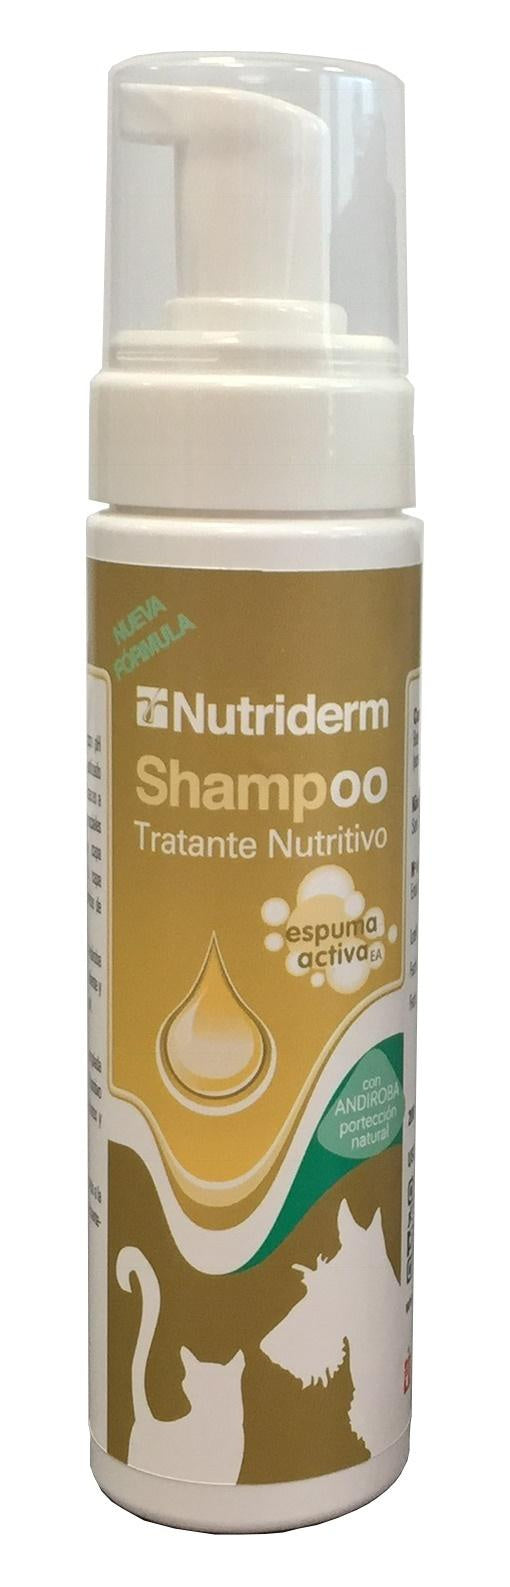 Nutriderm Shampoo Tratamiento Nutritivo, 200 ml